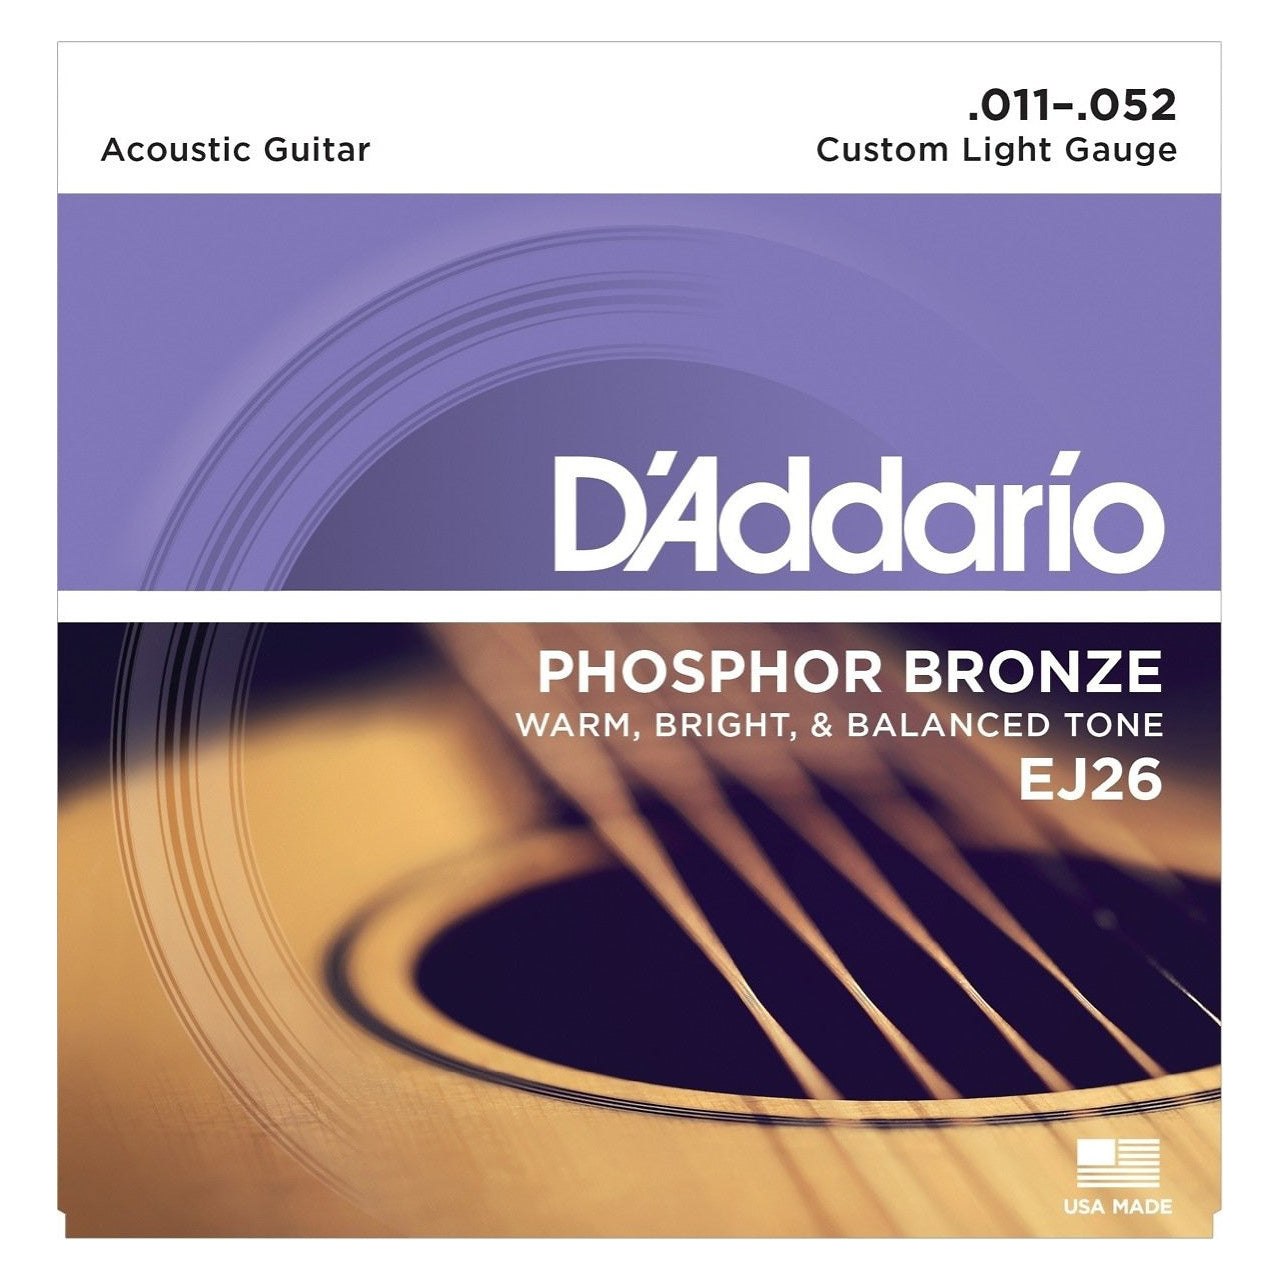 D'Addario EJ26 Phosphor Bronze Acoustic Guitar Strings (Custom Light, 11-52), Single Set